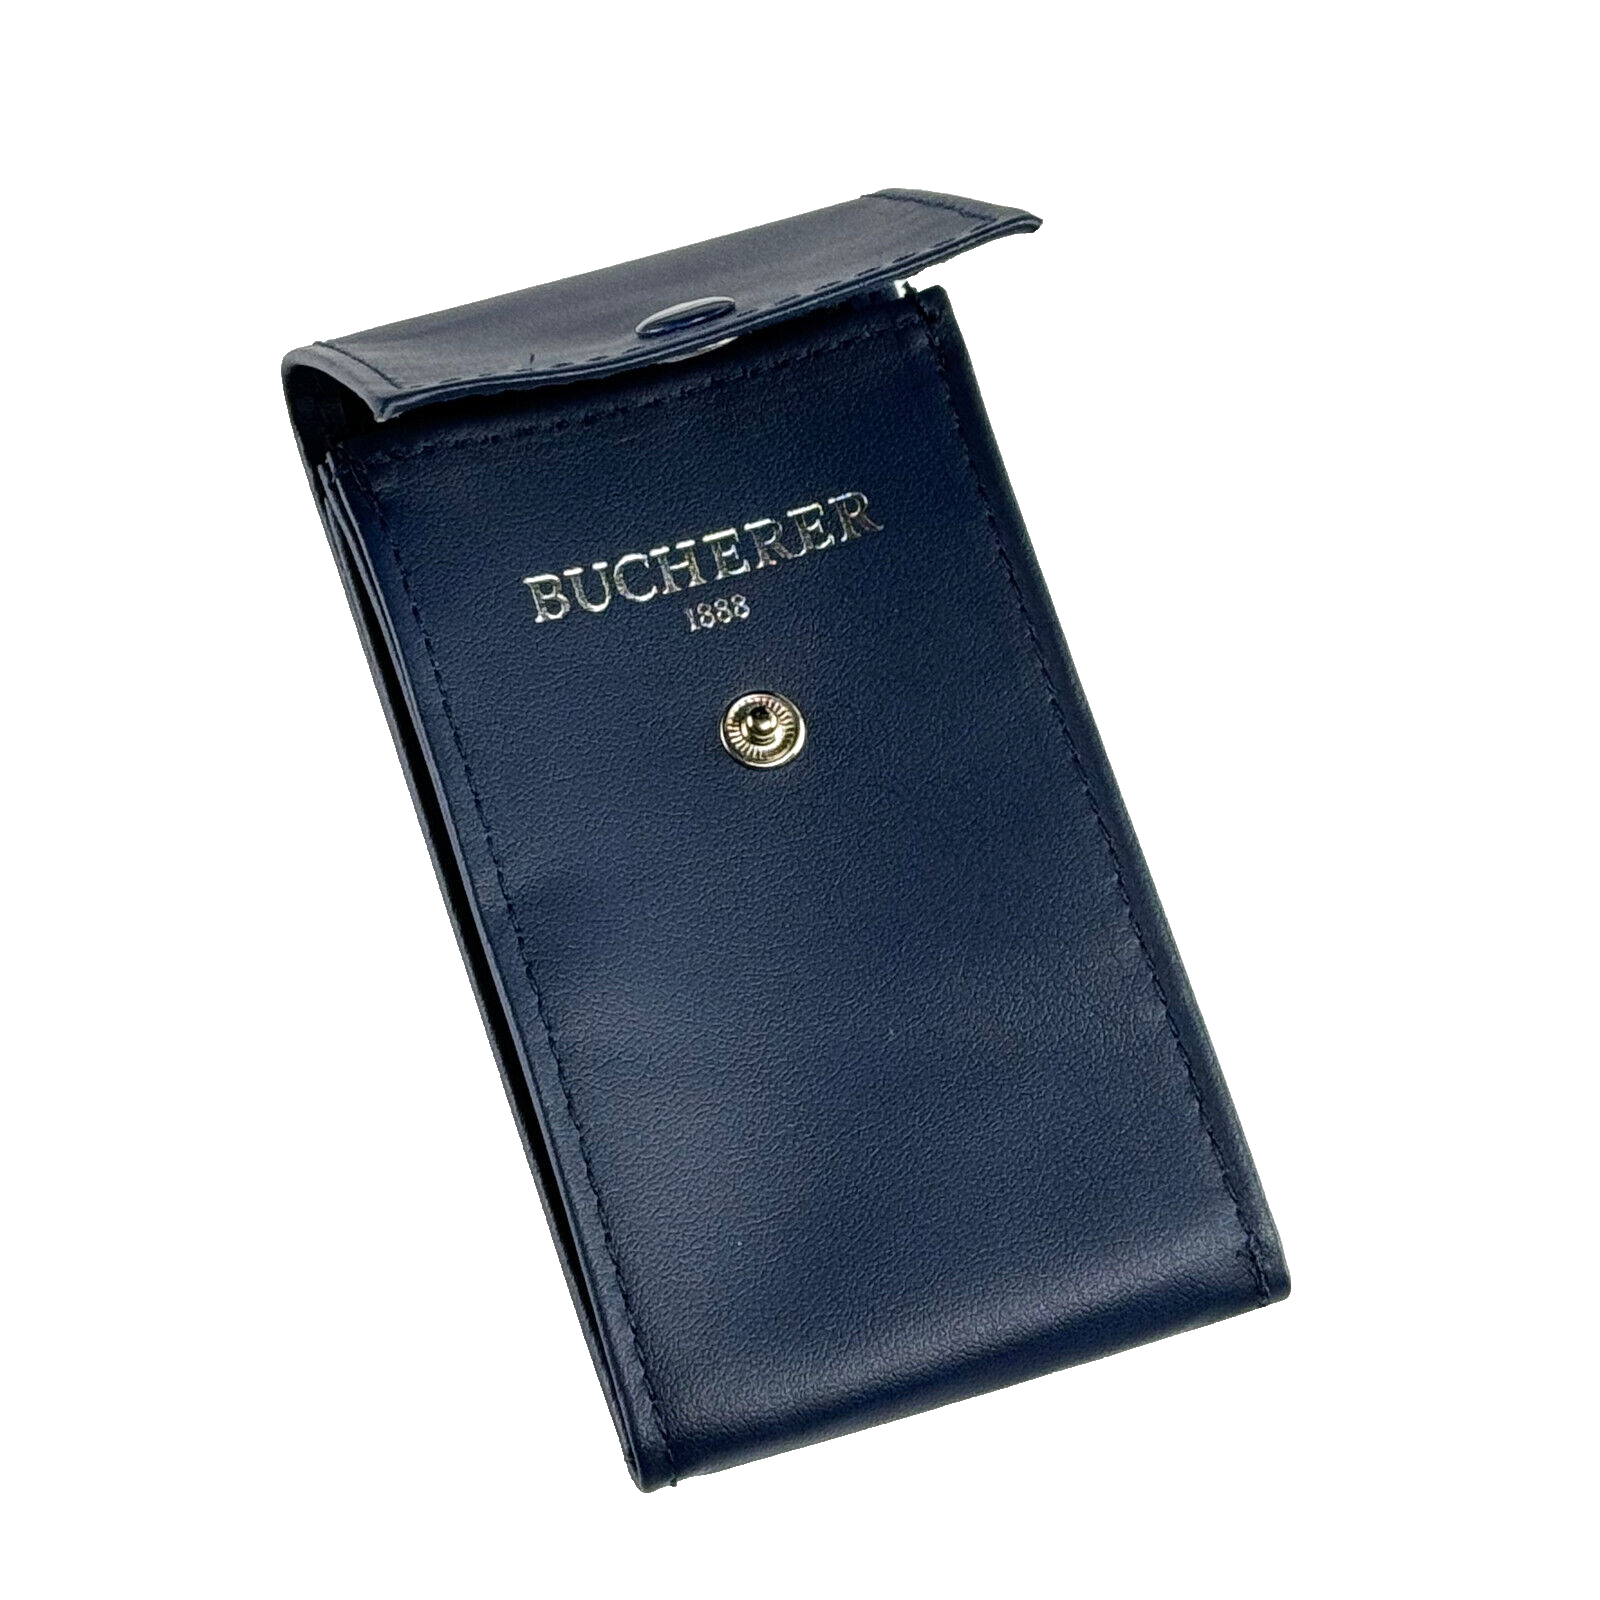  Bucherer 1888 Travel Case Pouch Service Reiseetui Etui Uhrenetui Reisebox Blau